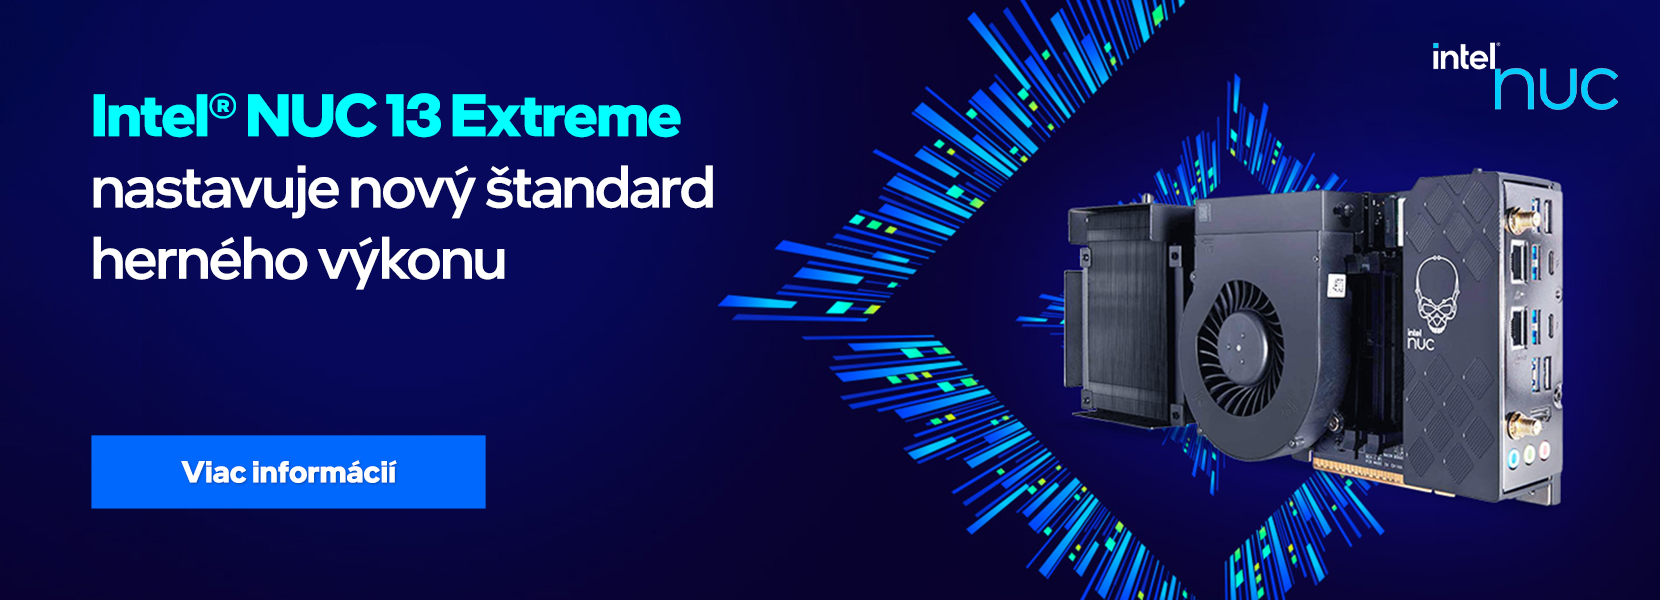 Intel NUC 13 Extreme nastavuje nový štandard herného výkonu